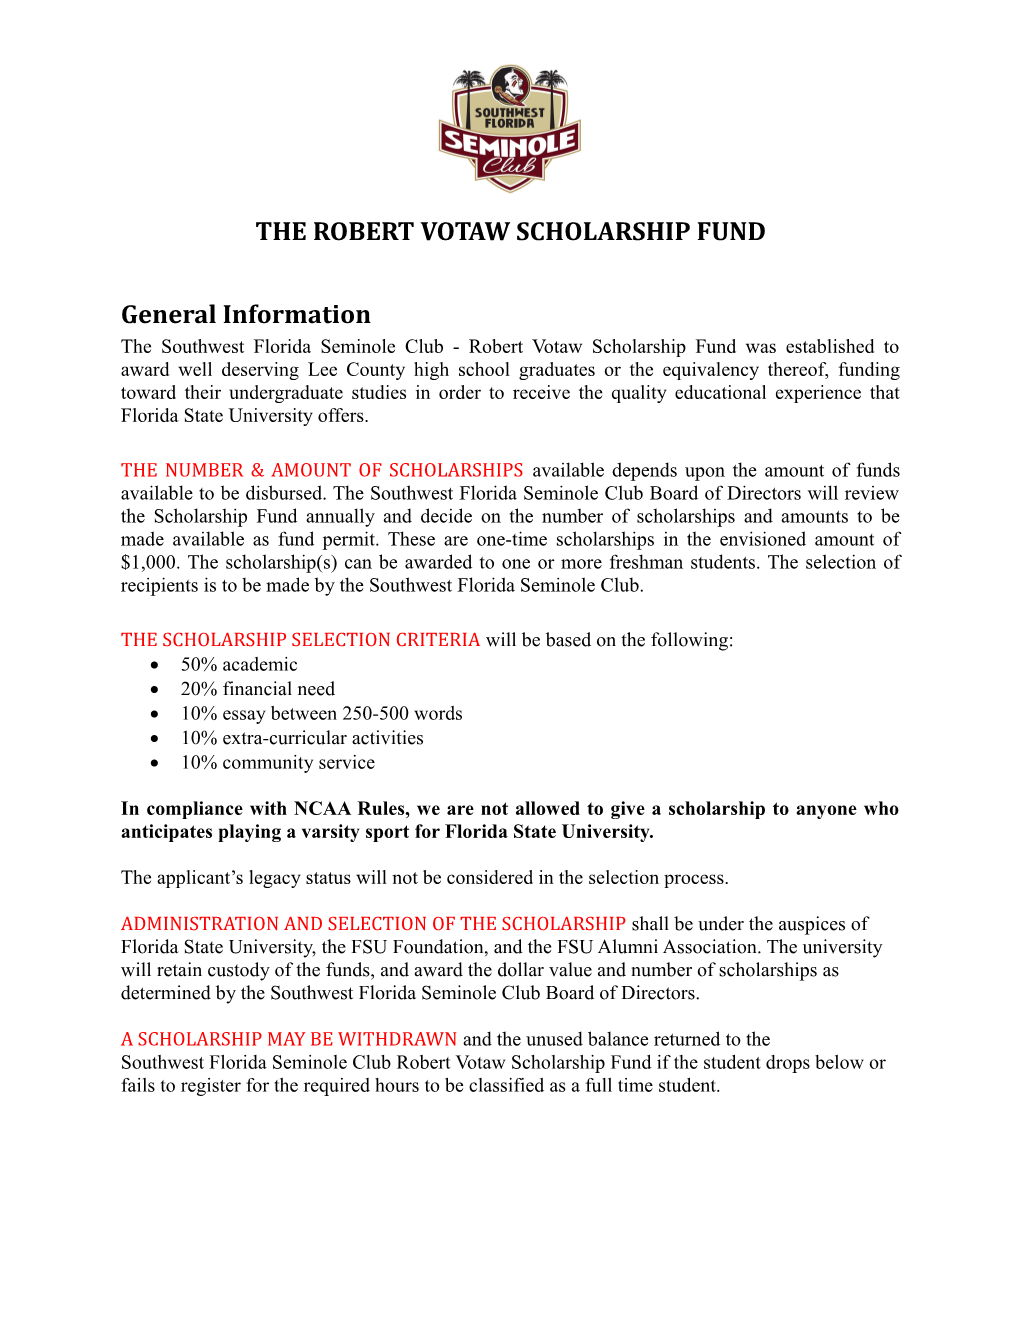 The Robert Votaw Scholarship Fund